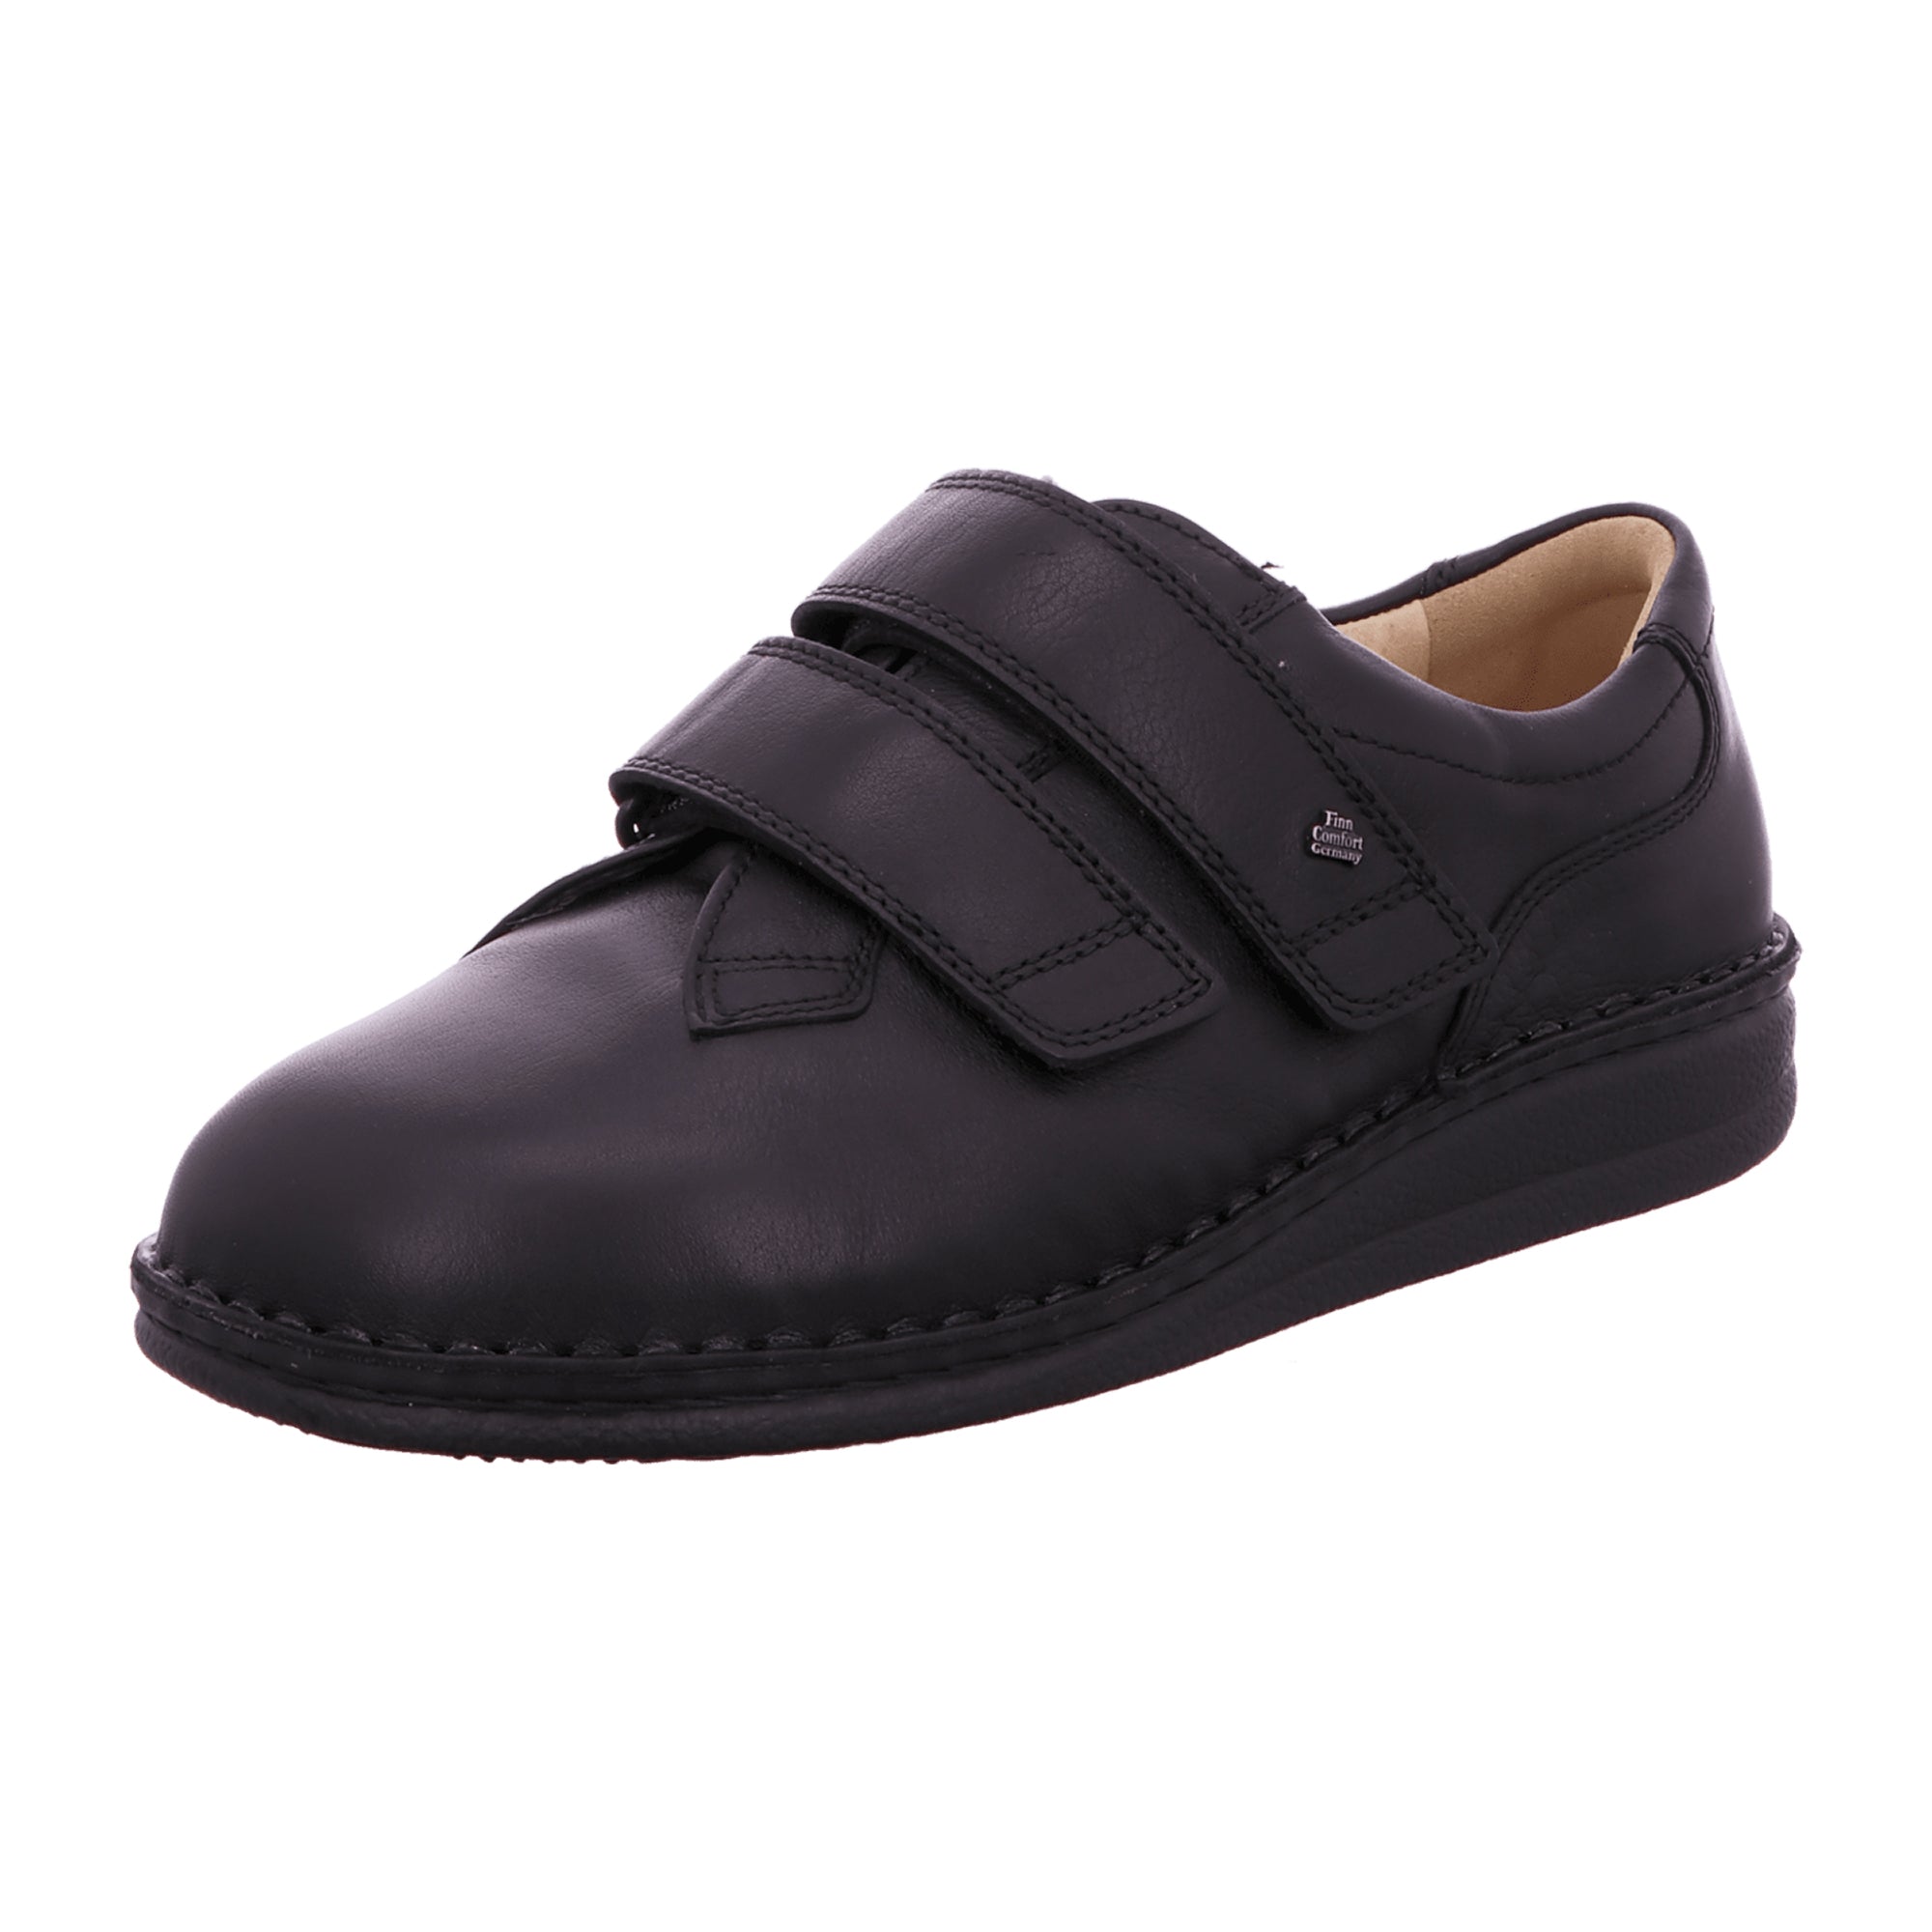 Finn Comfort Sponarind Men's Black Leather Shoes - Durable & Stylish